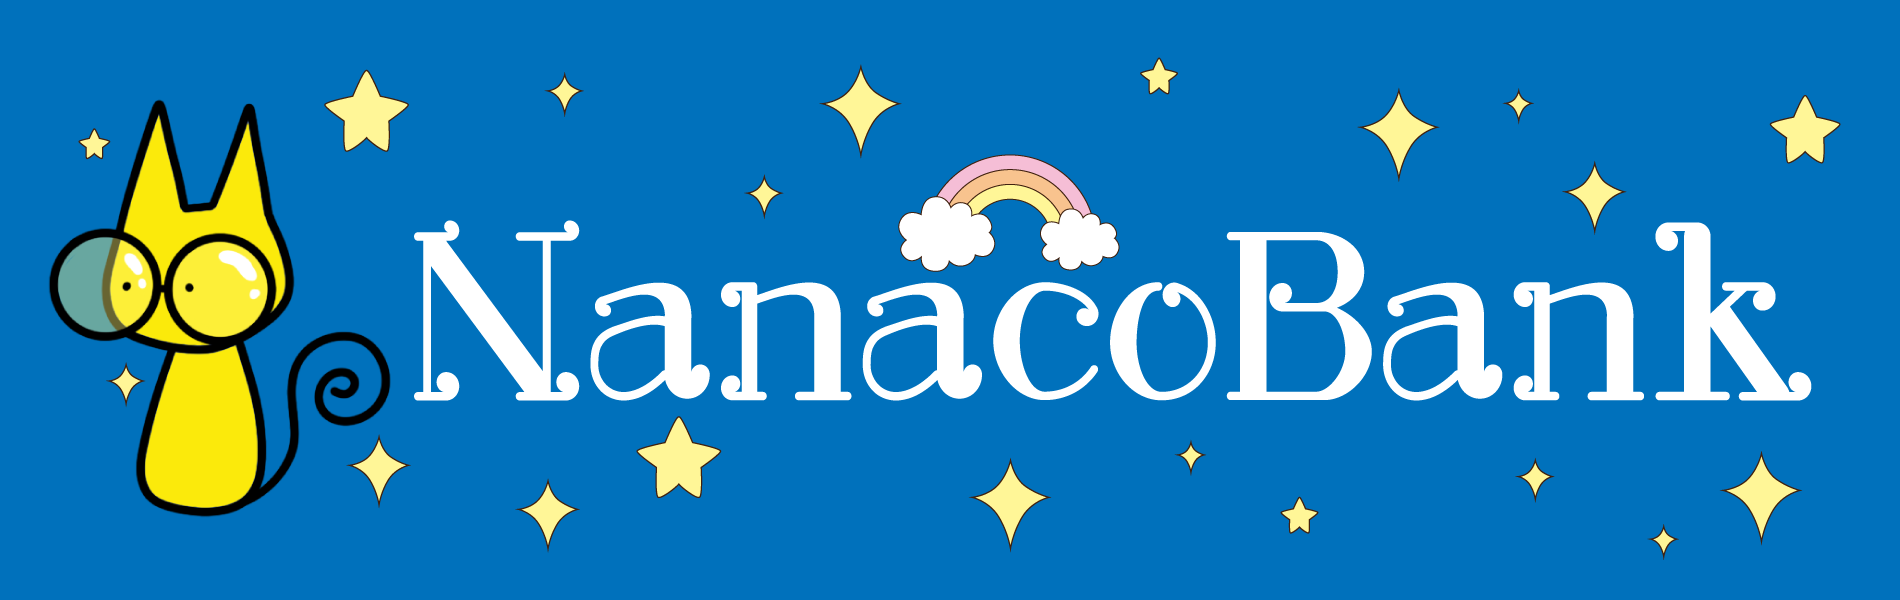 NanacoBank